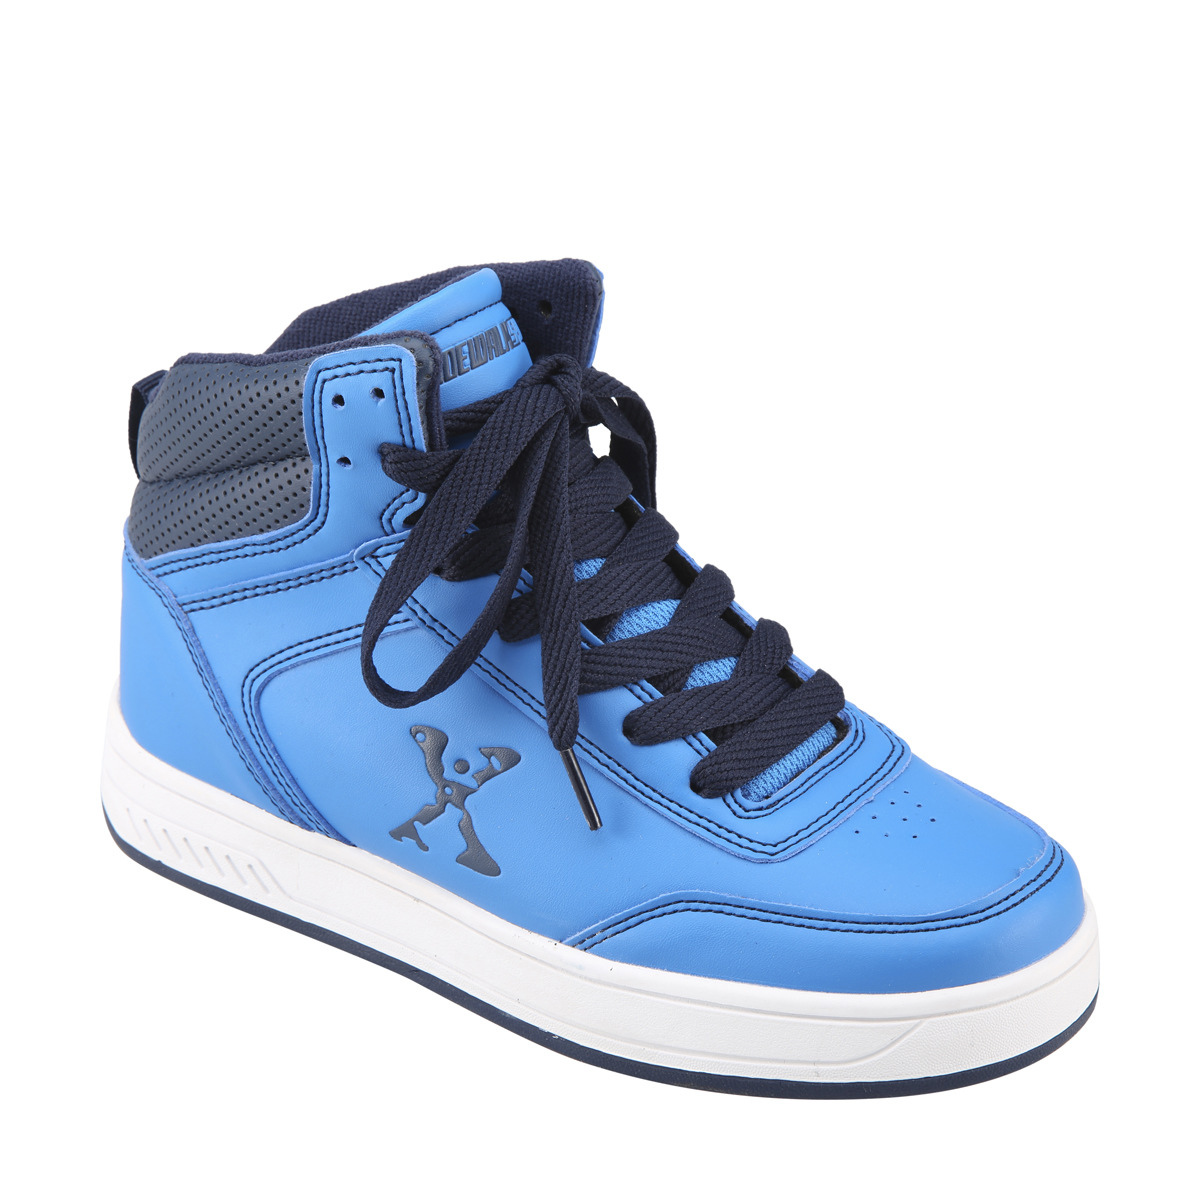 Sidewalk Sports Size 6 Blue Skate Shoes